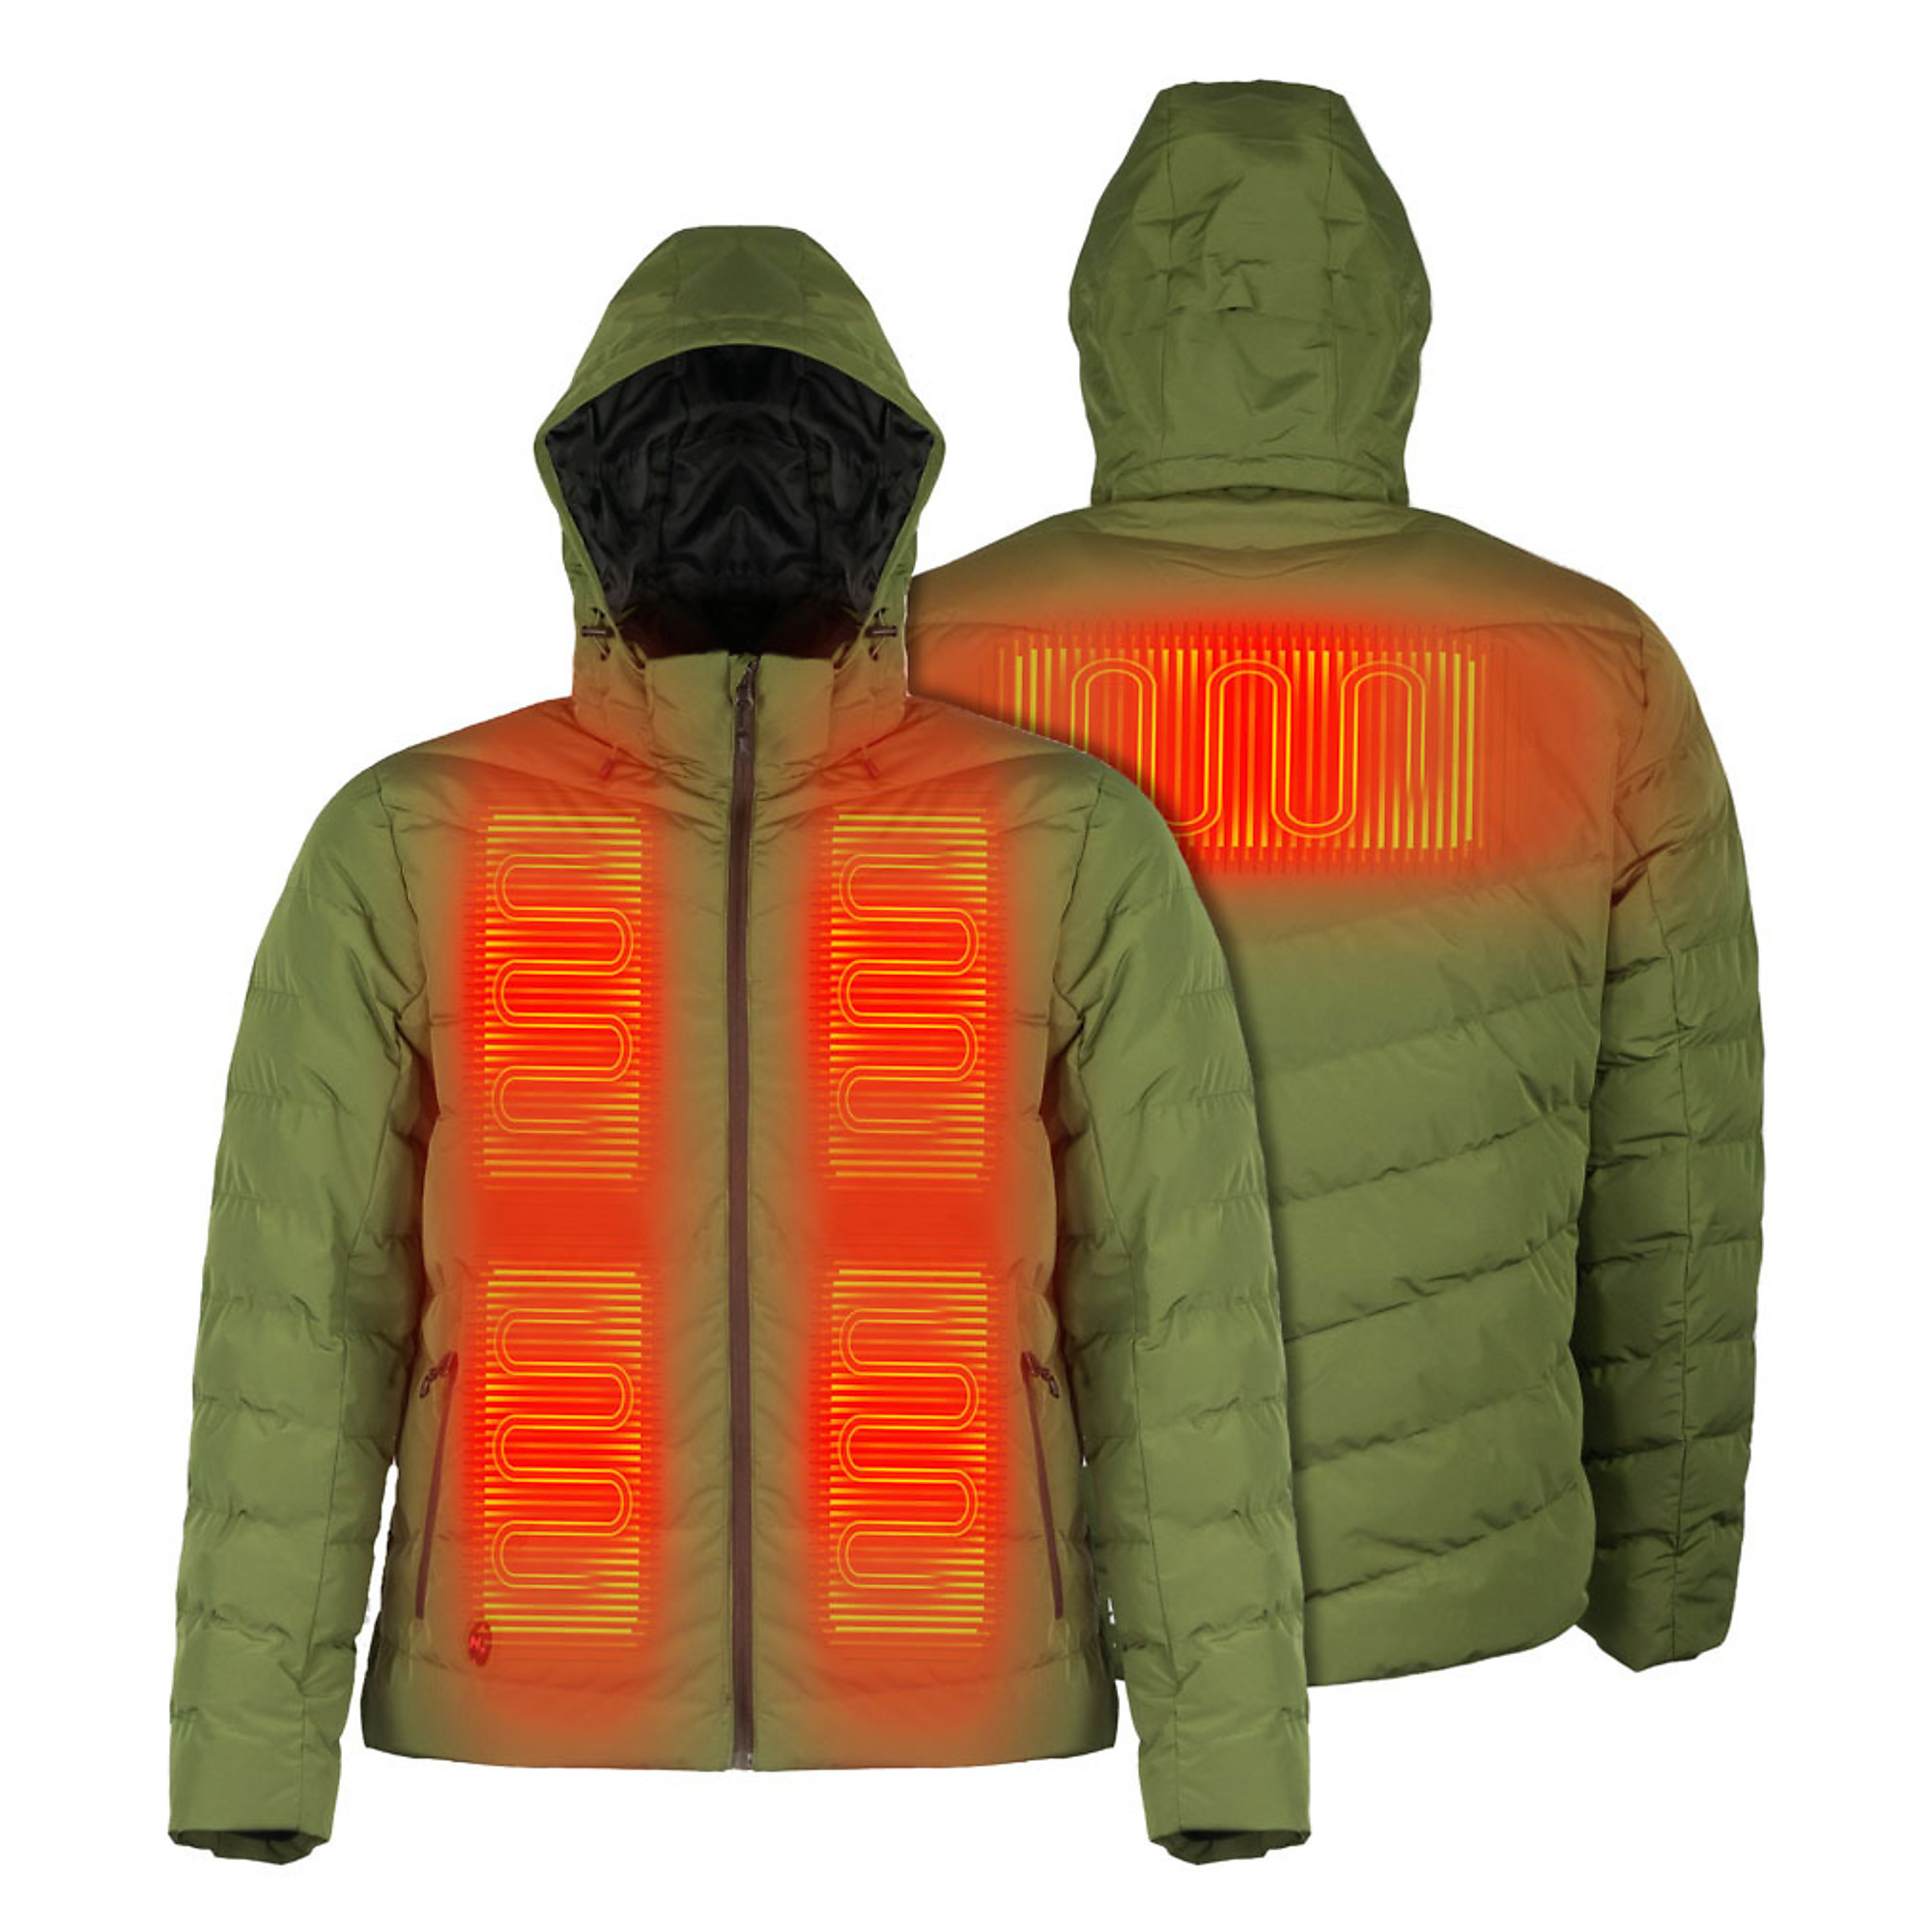 Fieldsheer, Men's Crest Heated Jacket with 7.4v Battery, Size M, Color Olive Green, Model MWMJ37110322